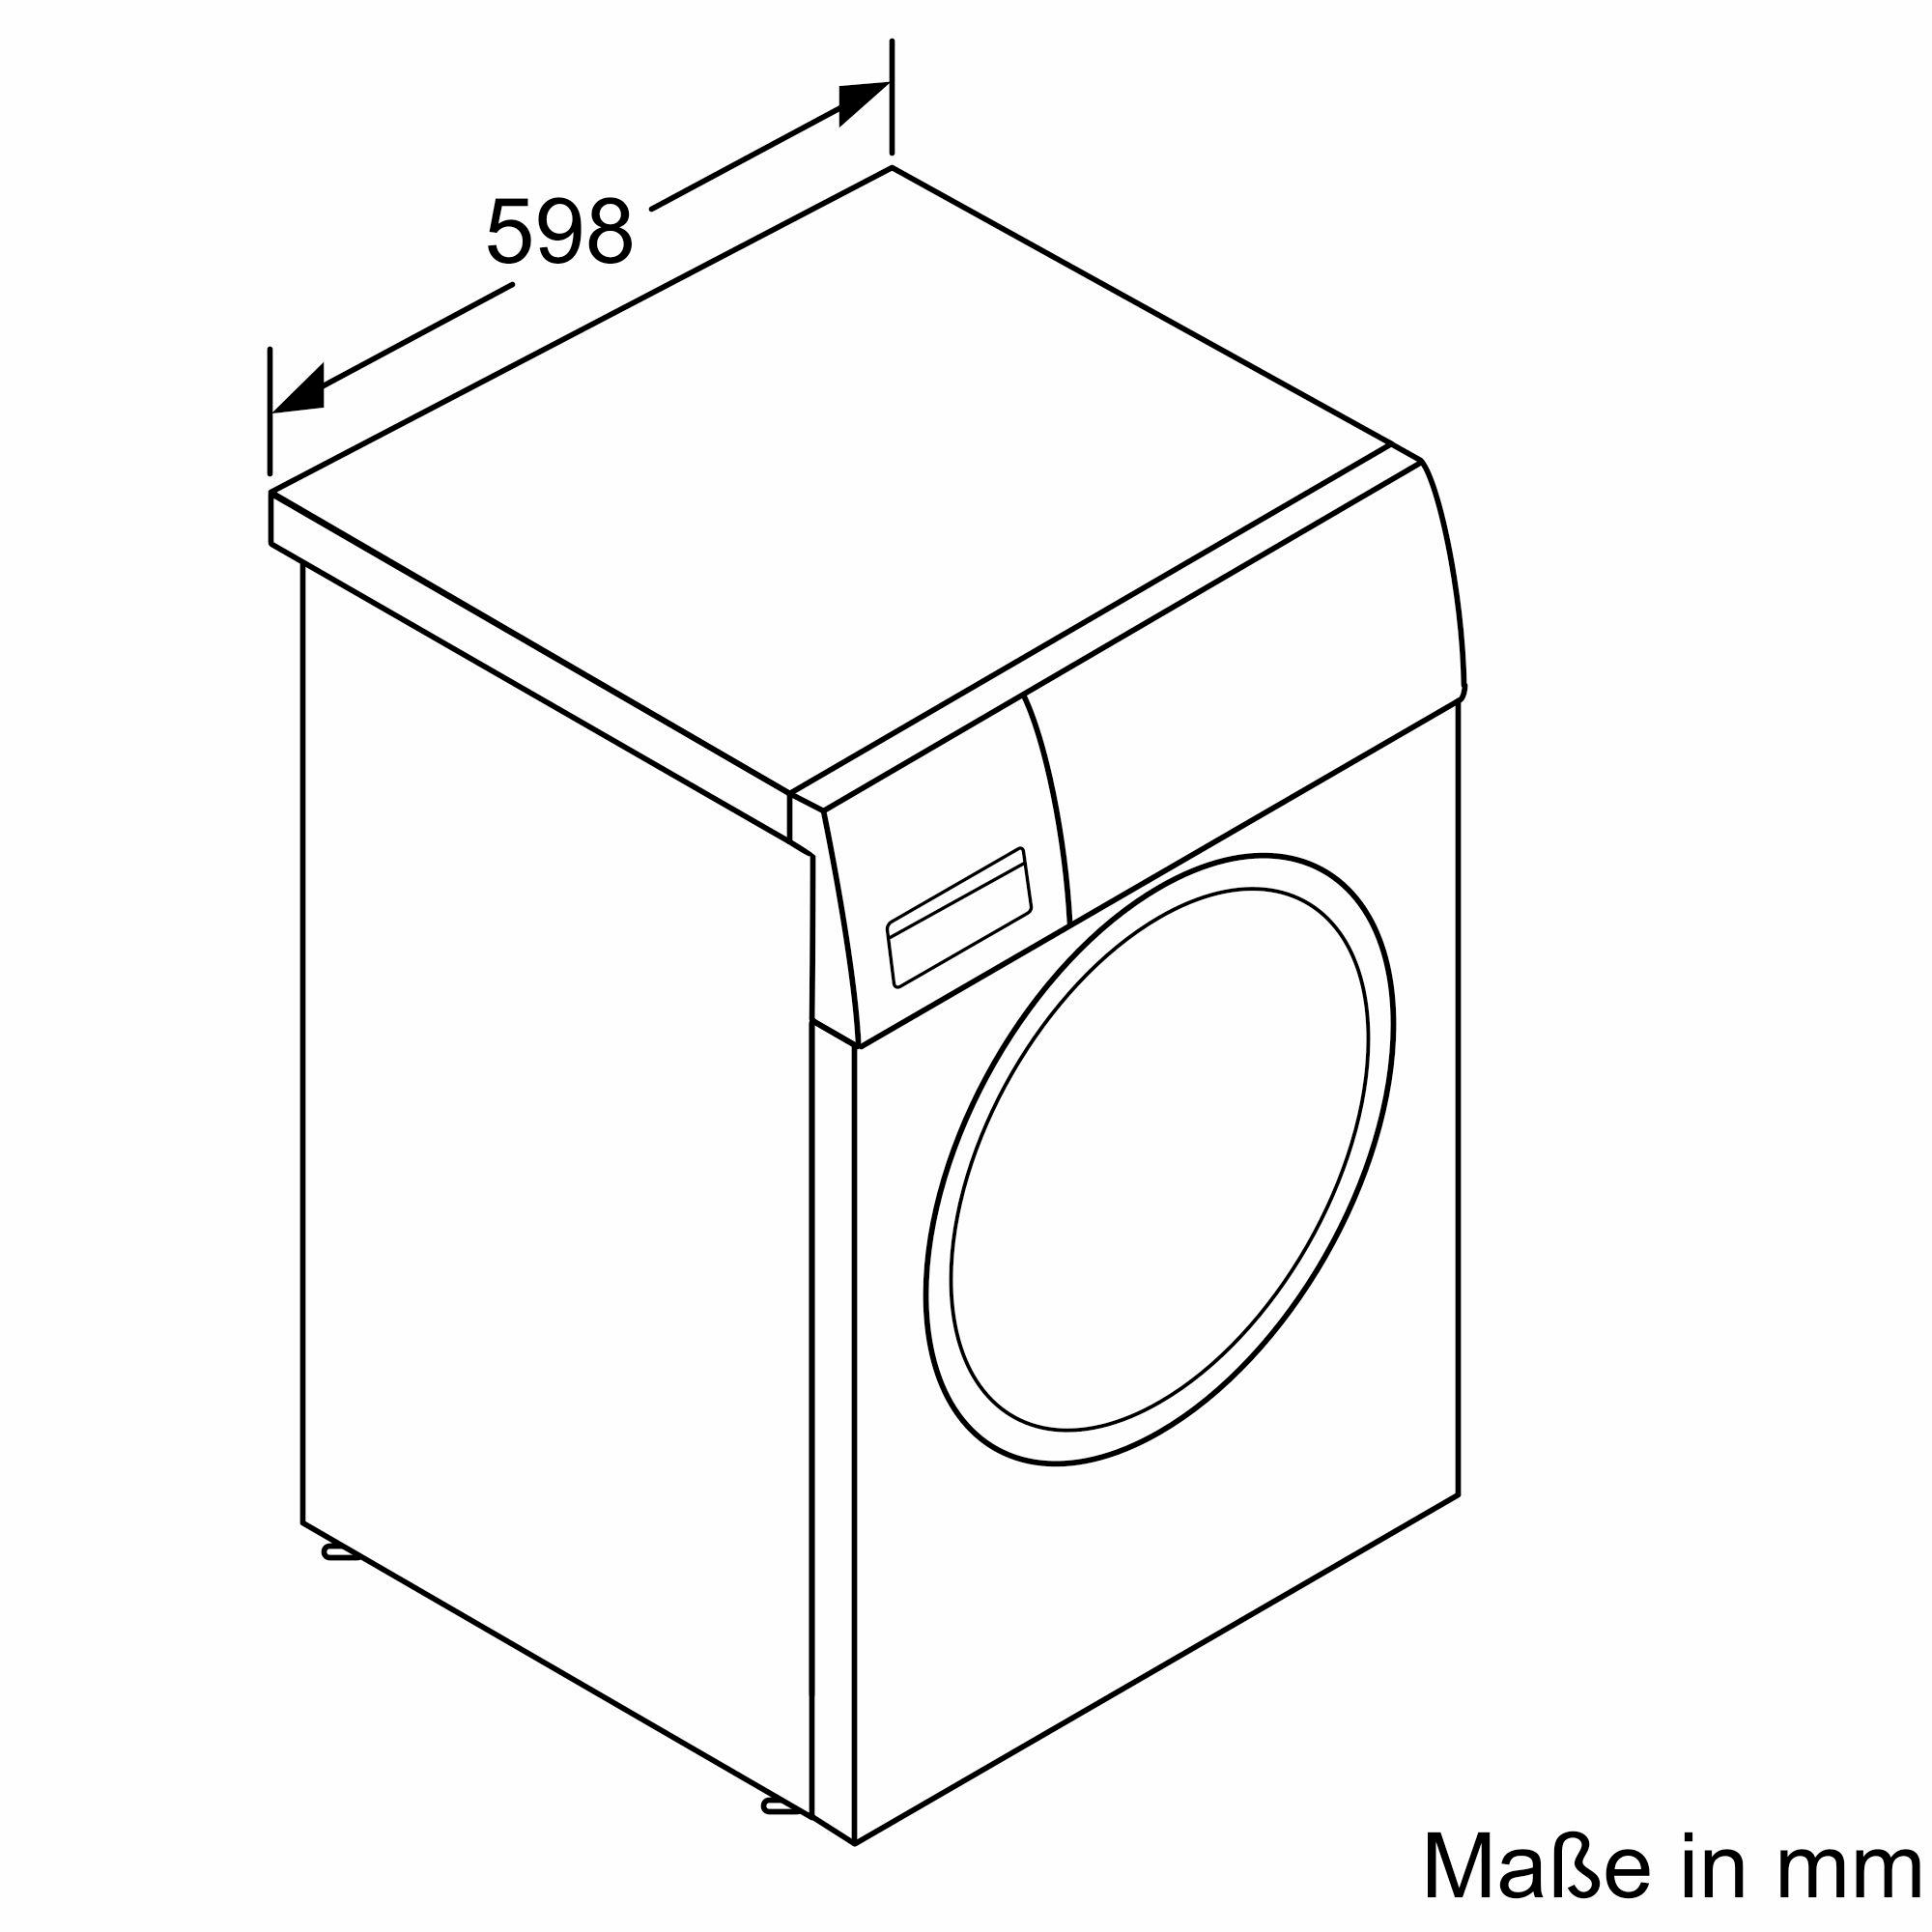 (9,0 BOSCH kg, 1400 U/Min., C) 6 Serie Waschmaschine WAU28R00